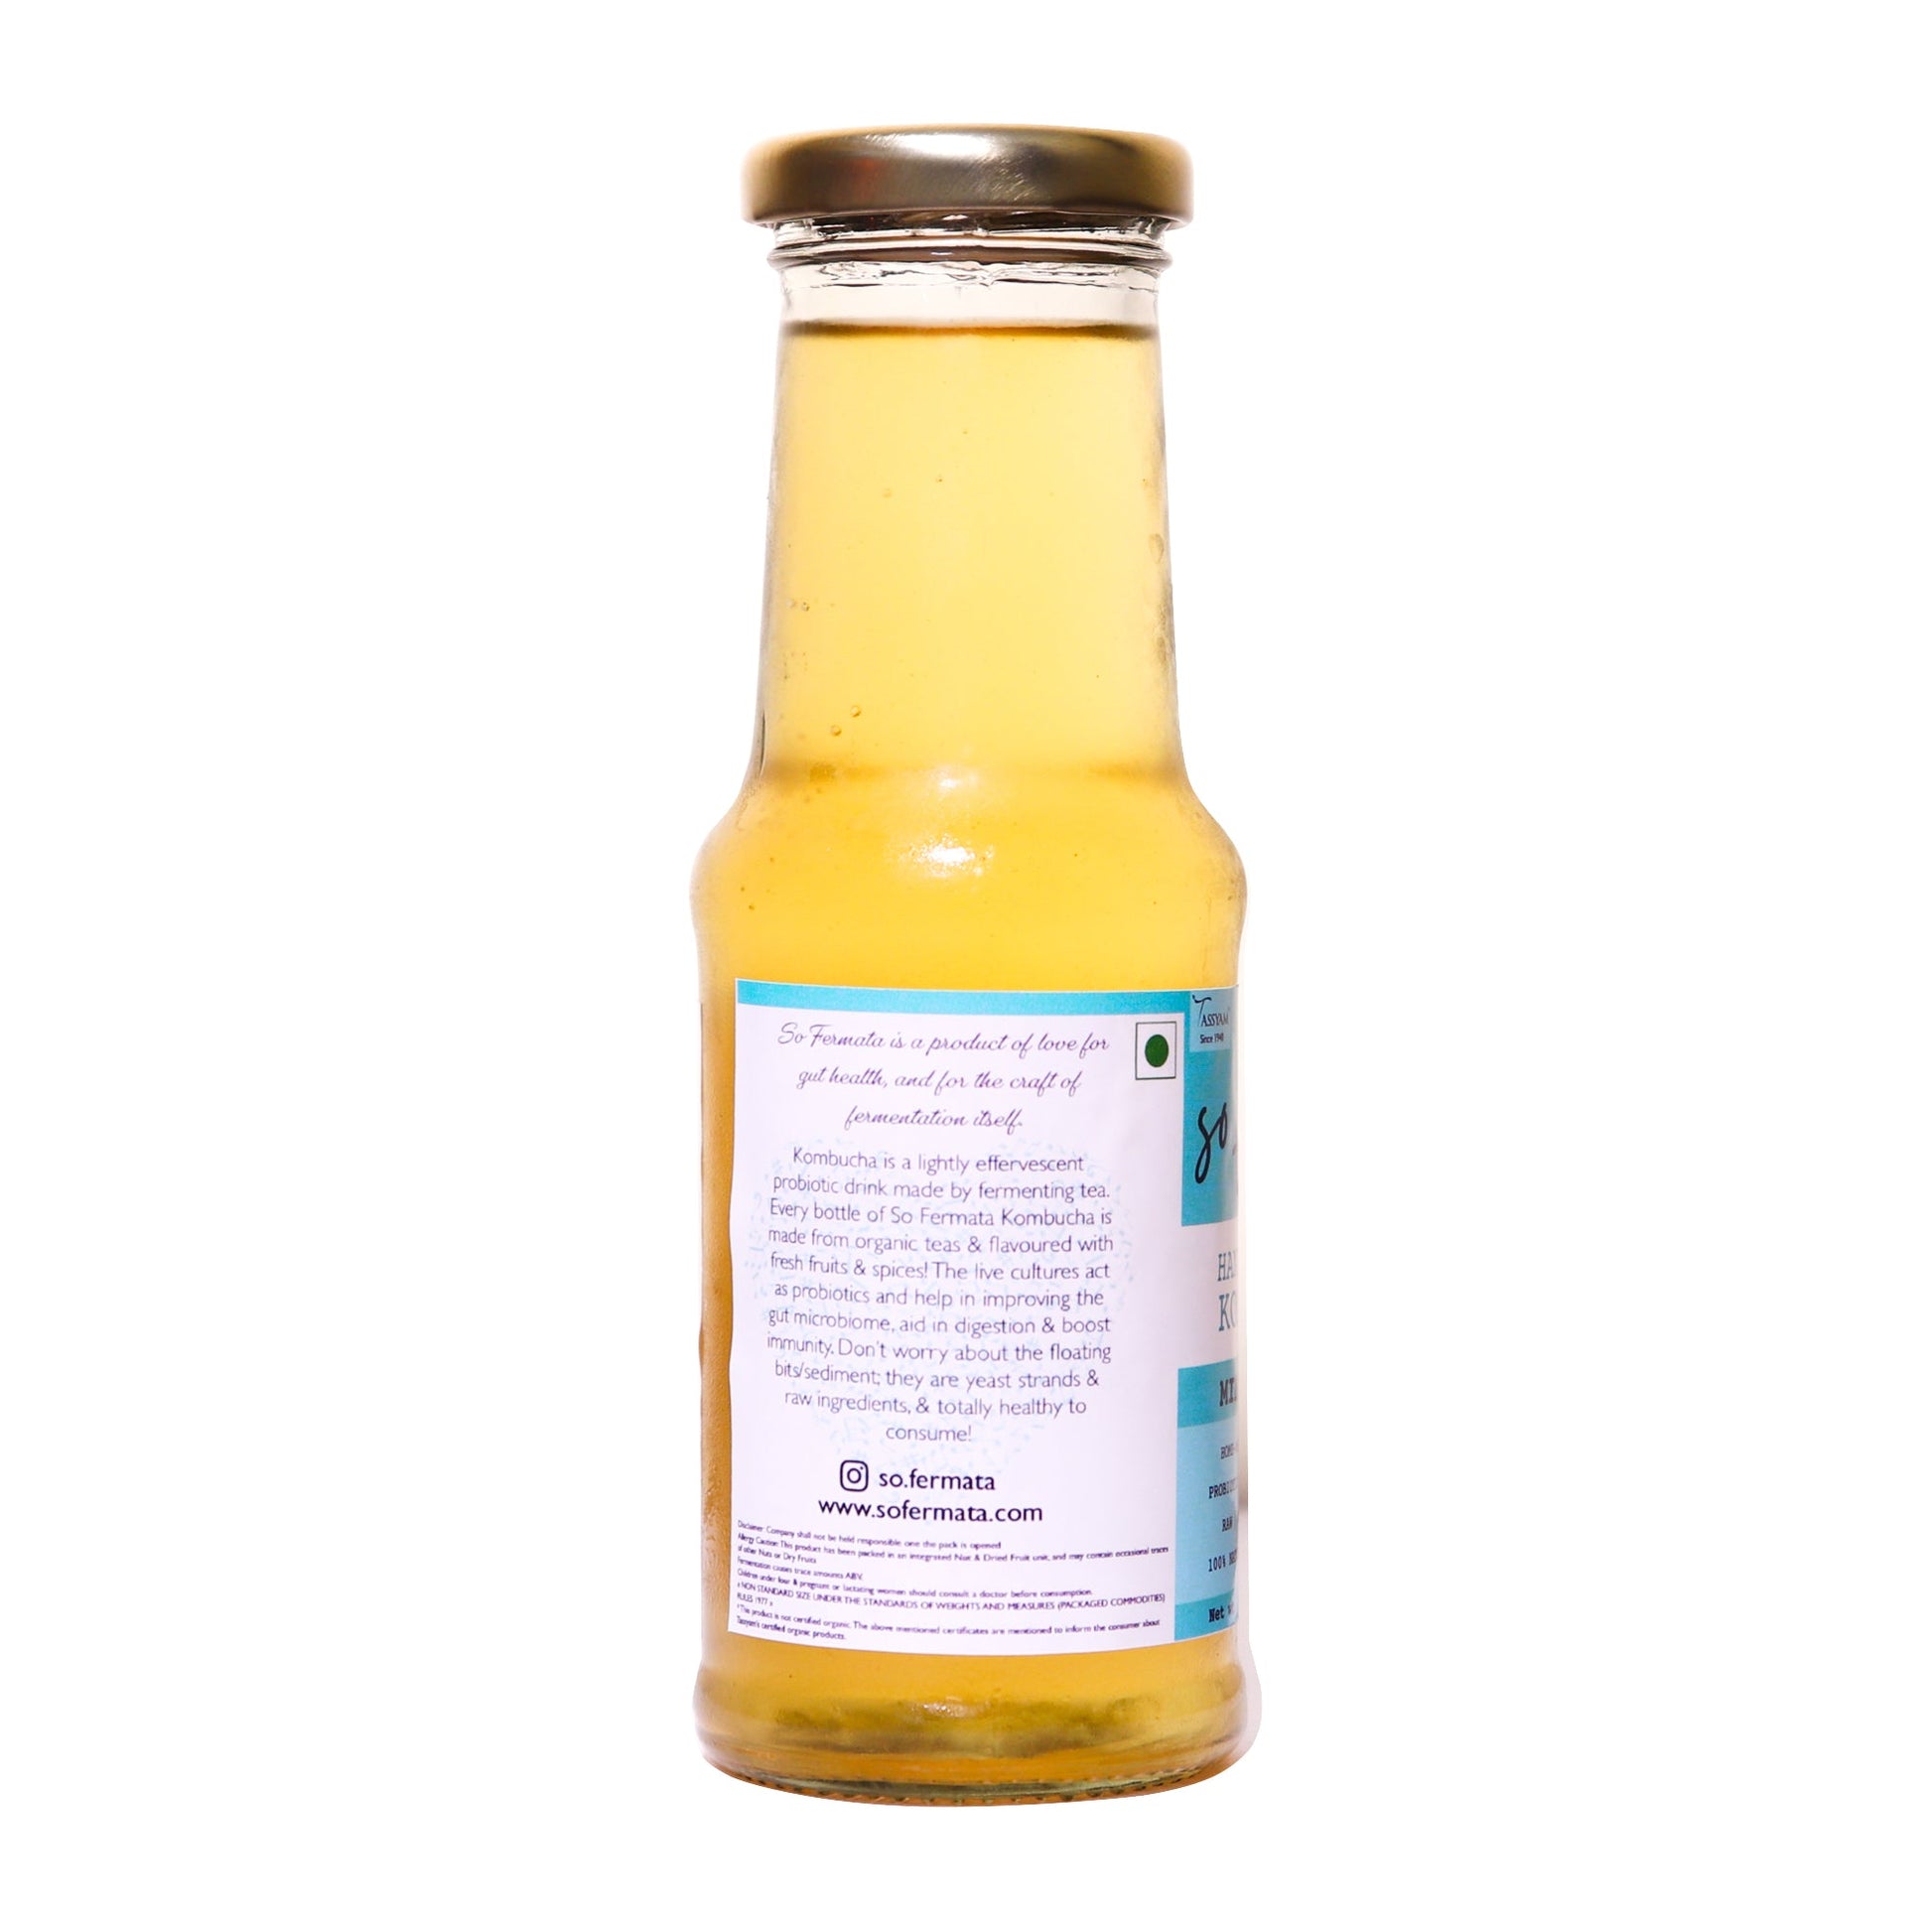 Artisanal Kombucha - Mint Ginger - Tassyam Organics